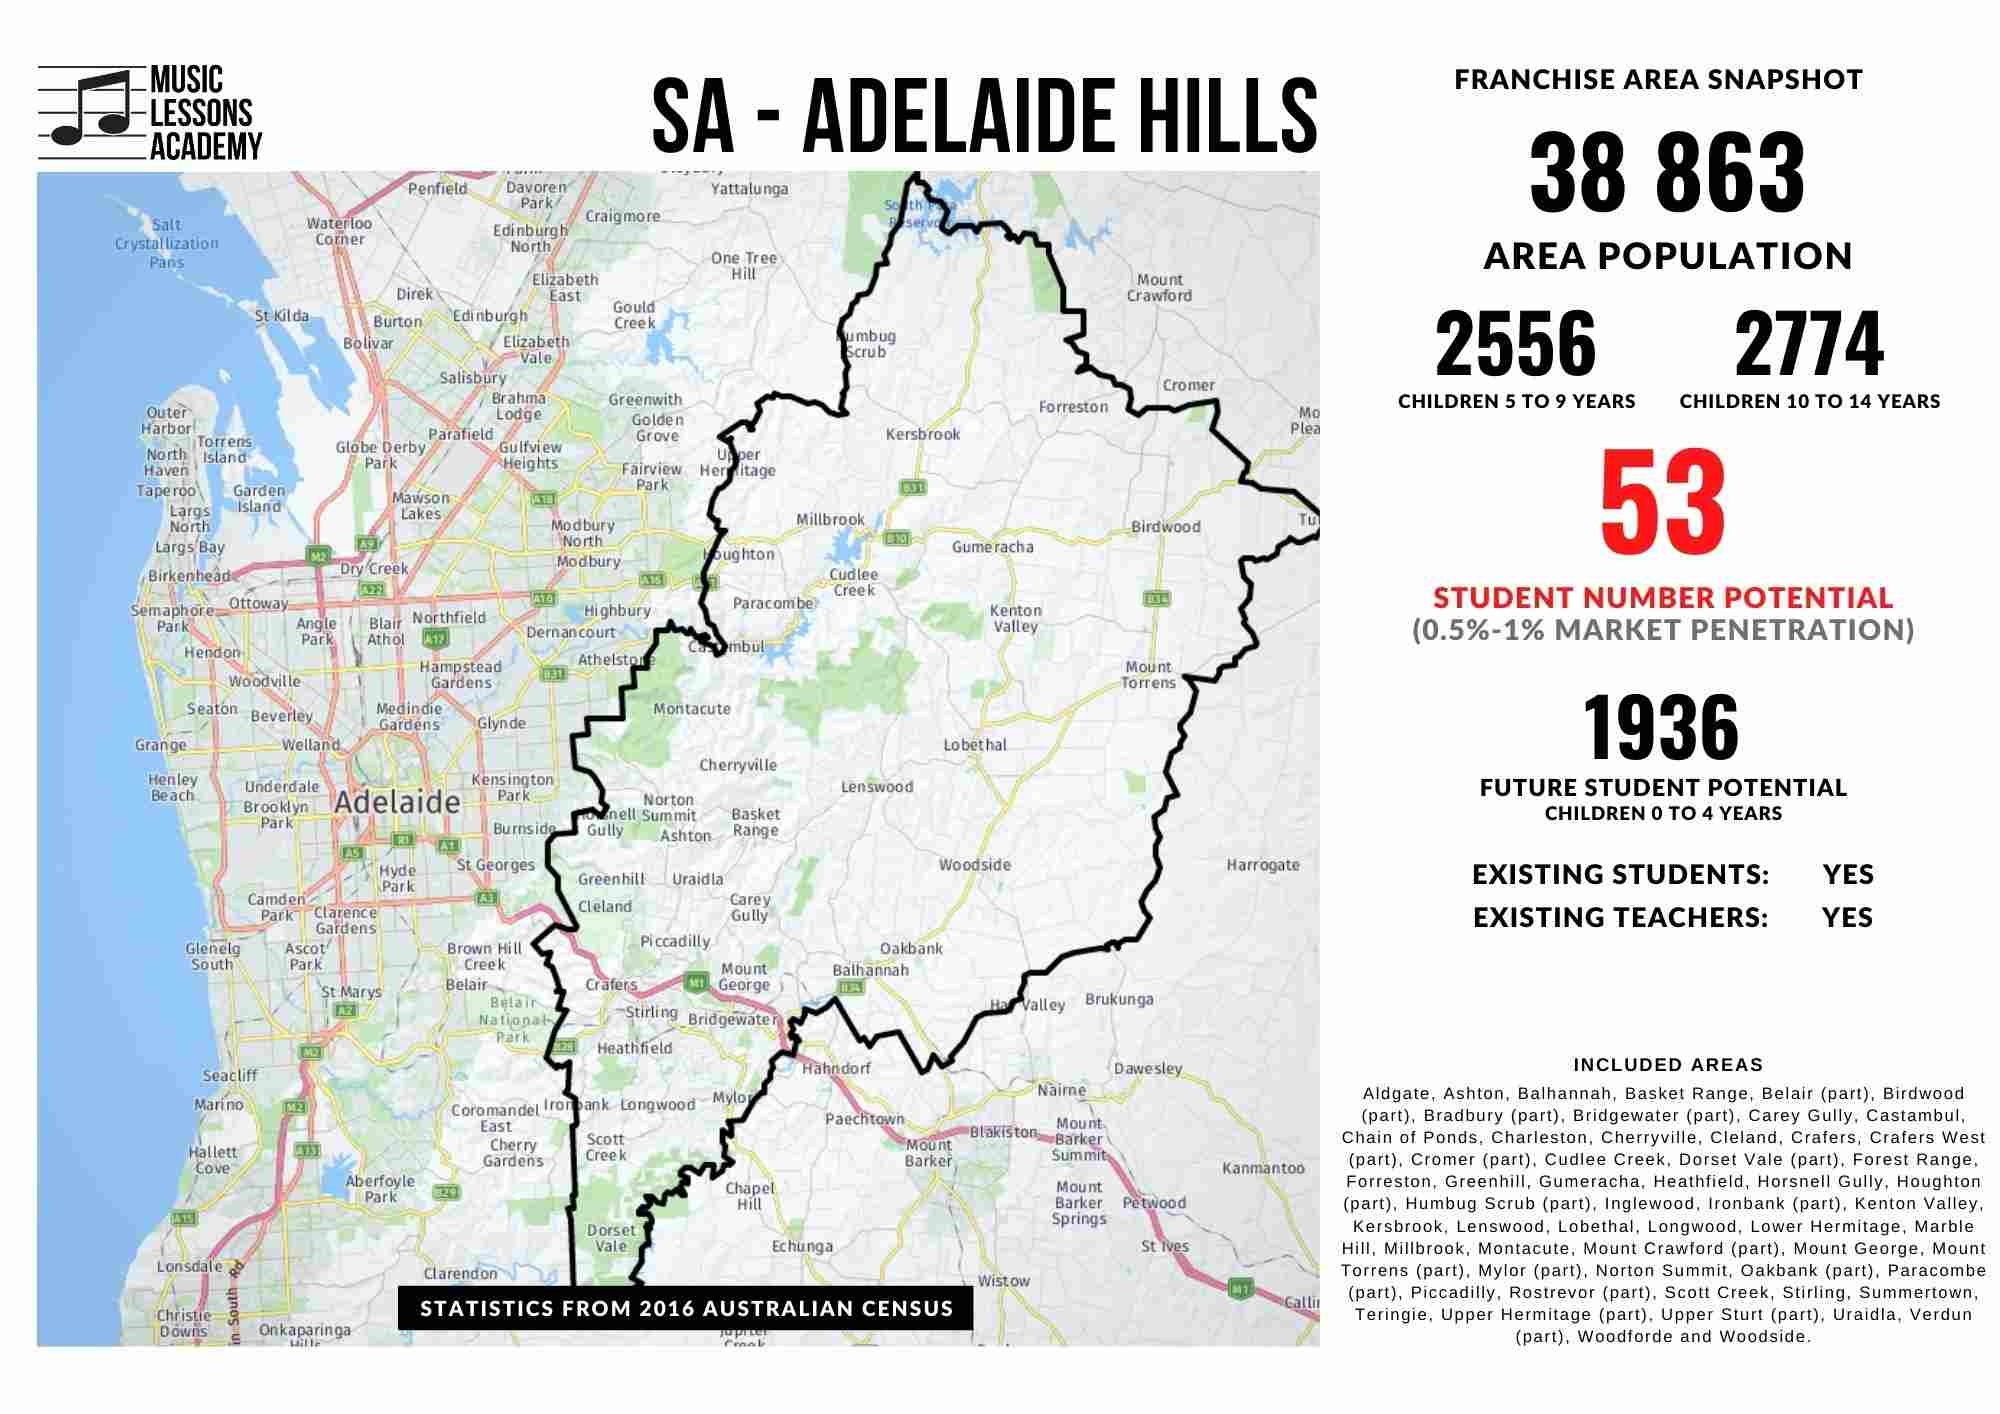 SA Adelaide Hills Franchise for sale